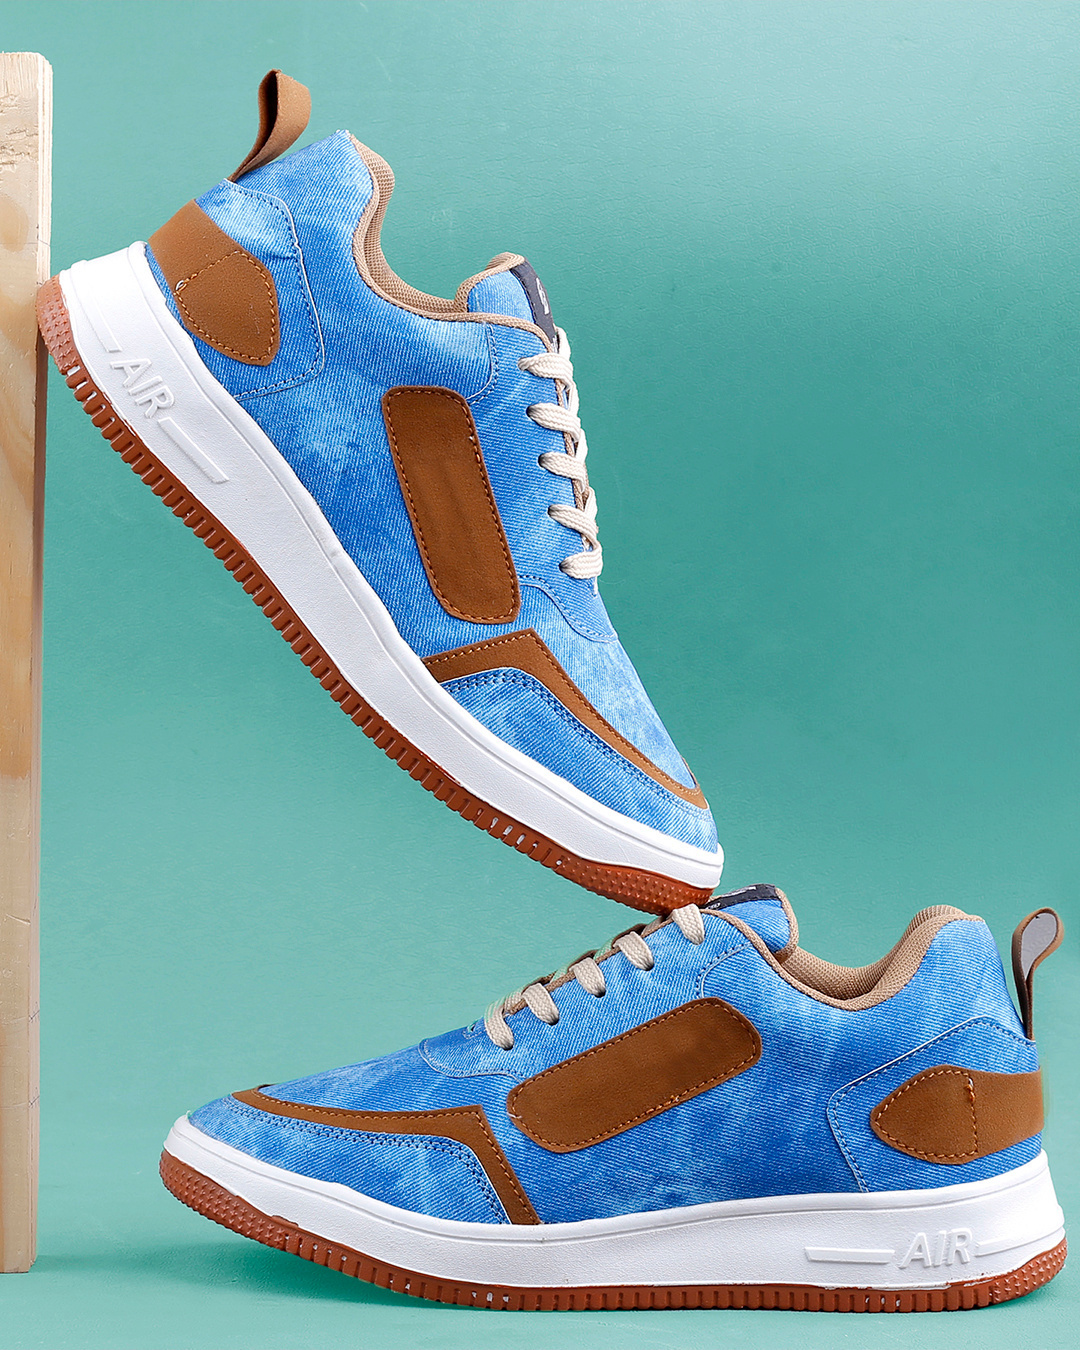 Buy Men's Sky Blue Casual Shoes Online in India at Bewakoof